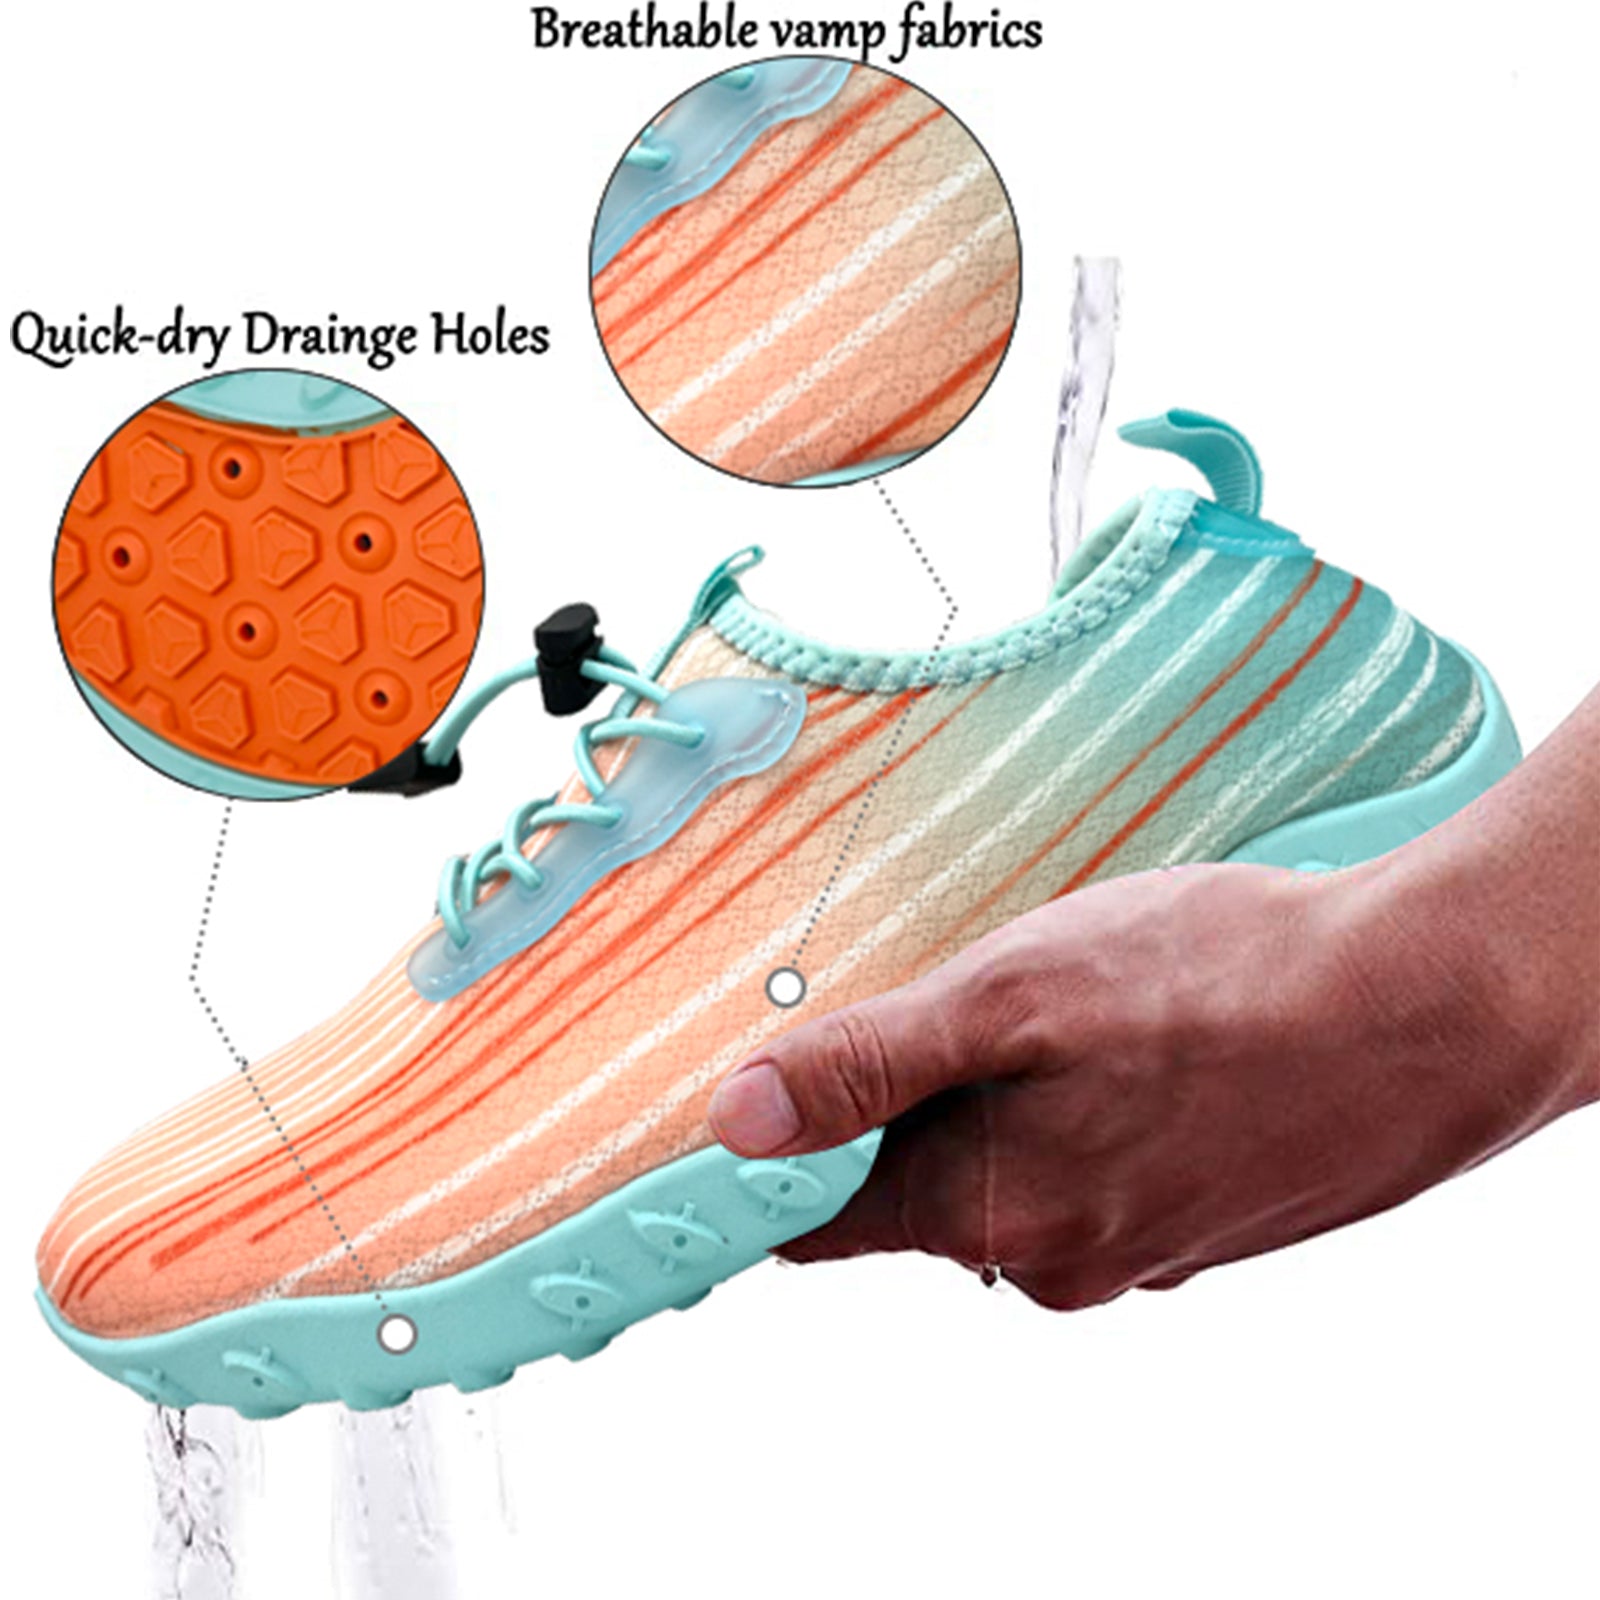 Water Shoes for Men and Women Soft Breathable Slip-on Aqua Shoes Aqua Socks for Swim Beach Pool Surf Yoga (Orange Size US 10.5)